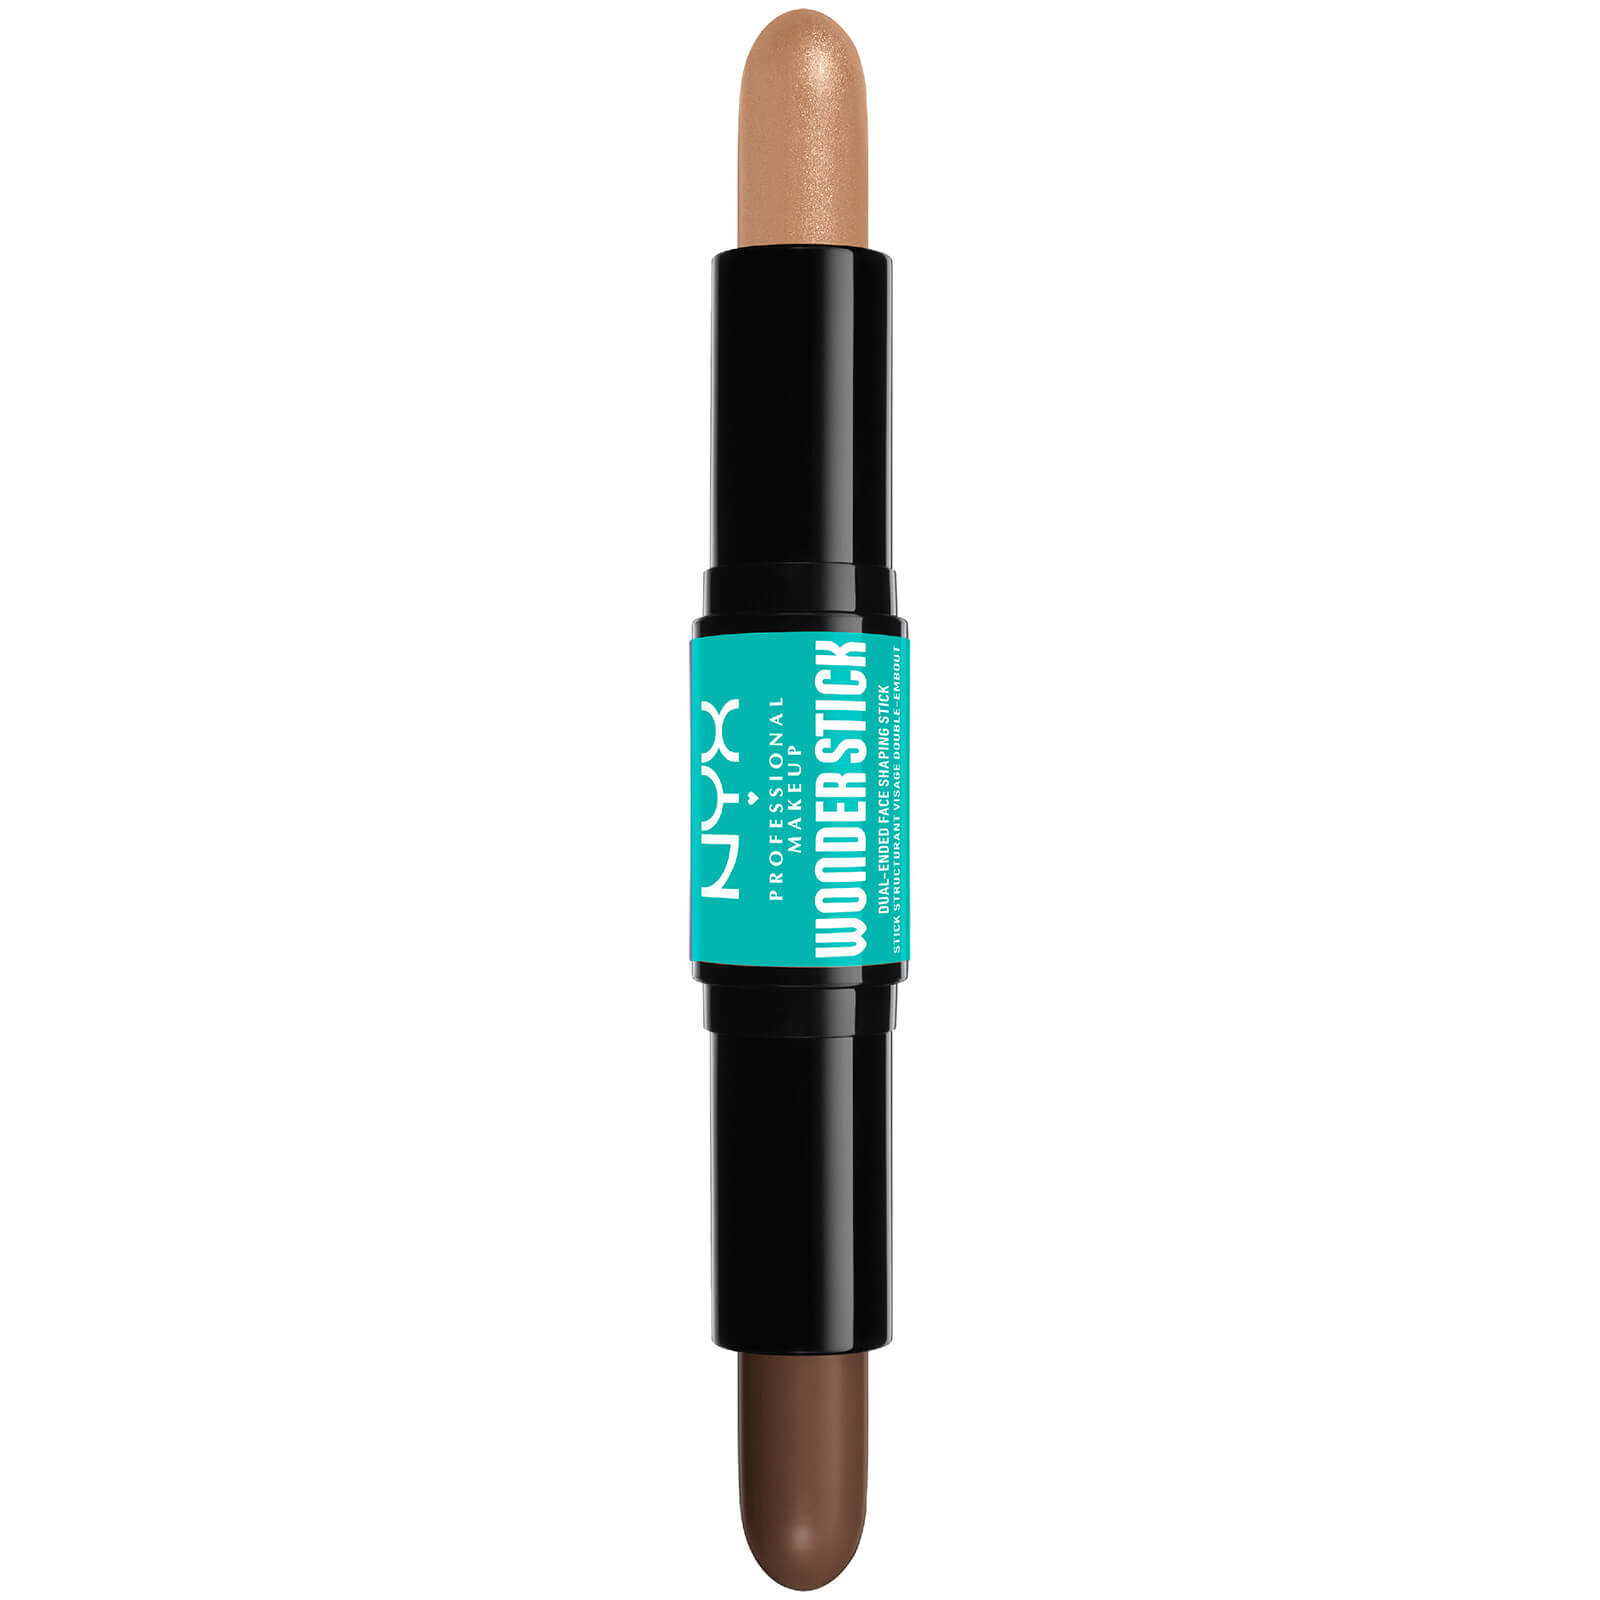 Nyx Professional Makeup Wonder Stick Highlight And Contour Stick (various Shades) - Medium Tan In Brown